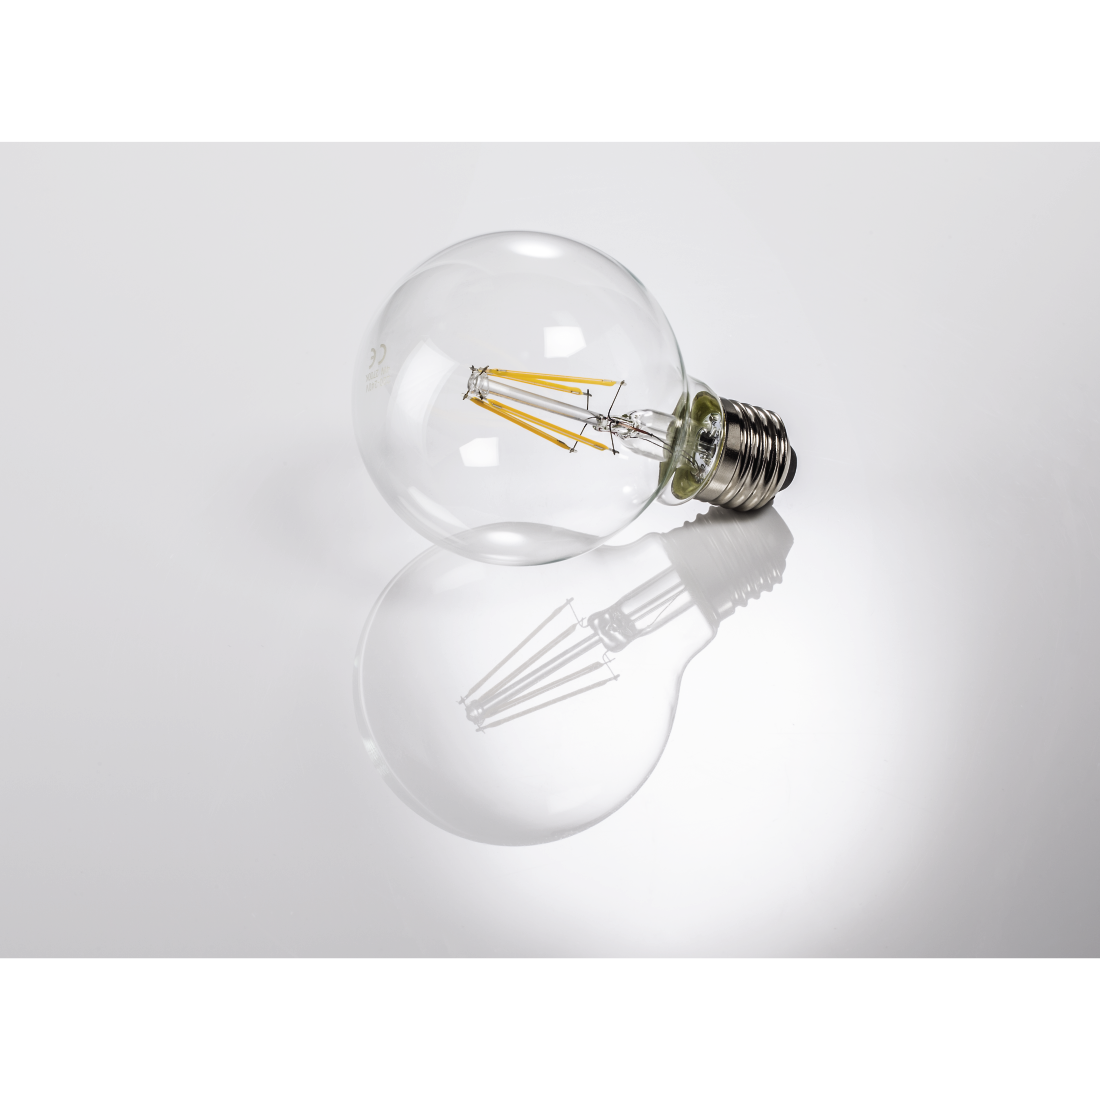 abx3 High-Res Image 3 - Xavax, LED Filament, E27, 470lm replaces 40W, globe bulb, warm white